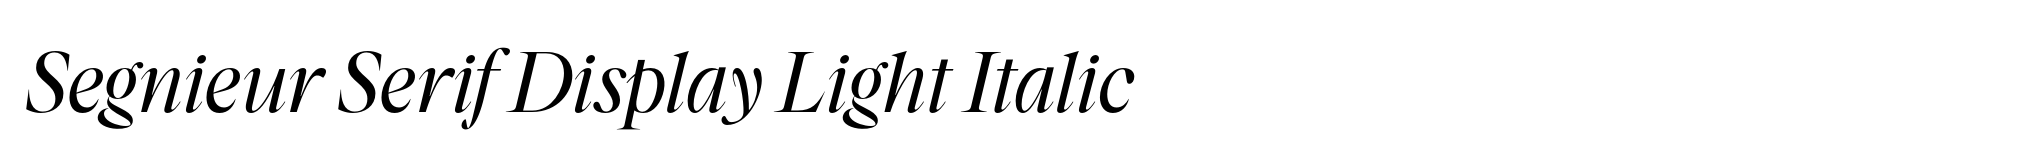 Segnieur Serif Display Light Italic image